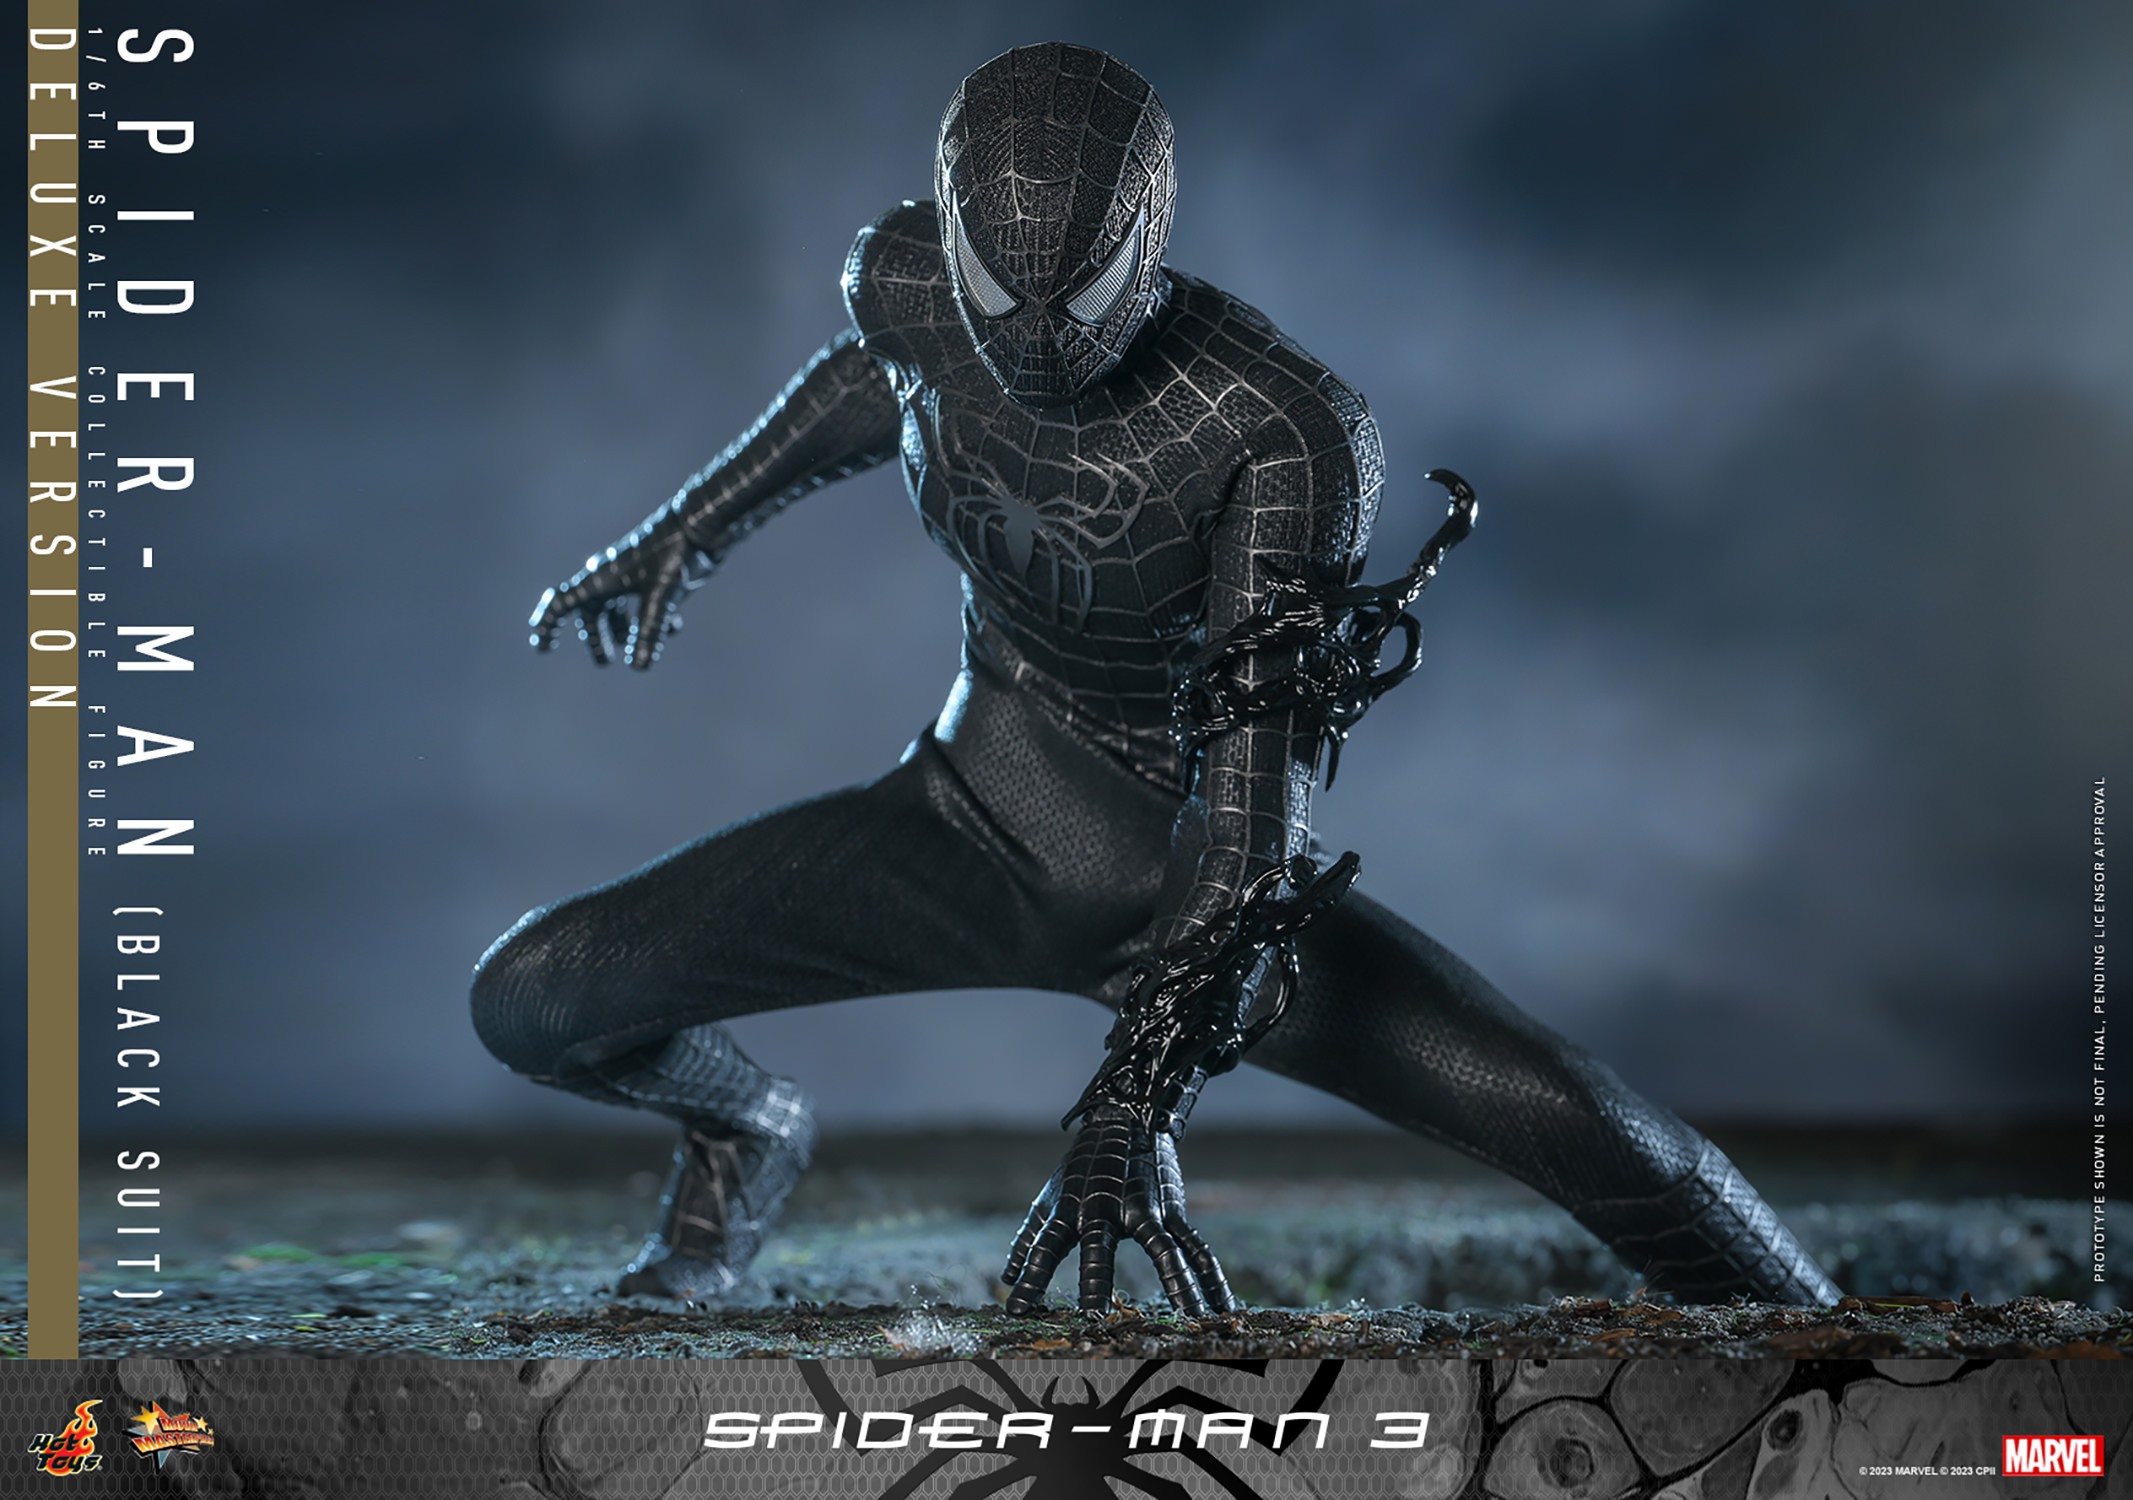 Spider-Man (Black Suit) (Deluxe Version) (Prototype Shown) View 9